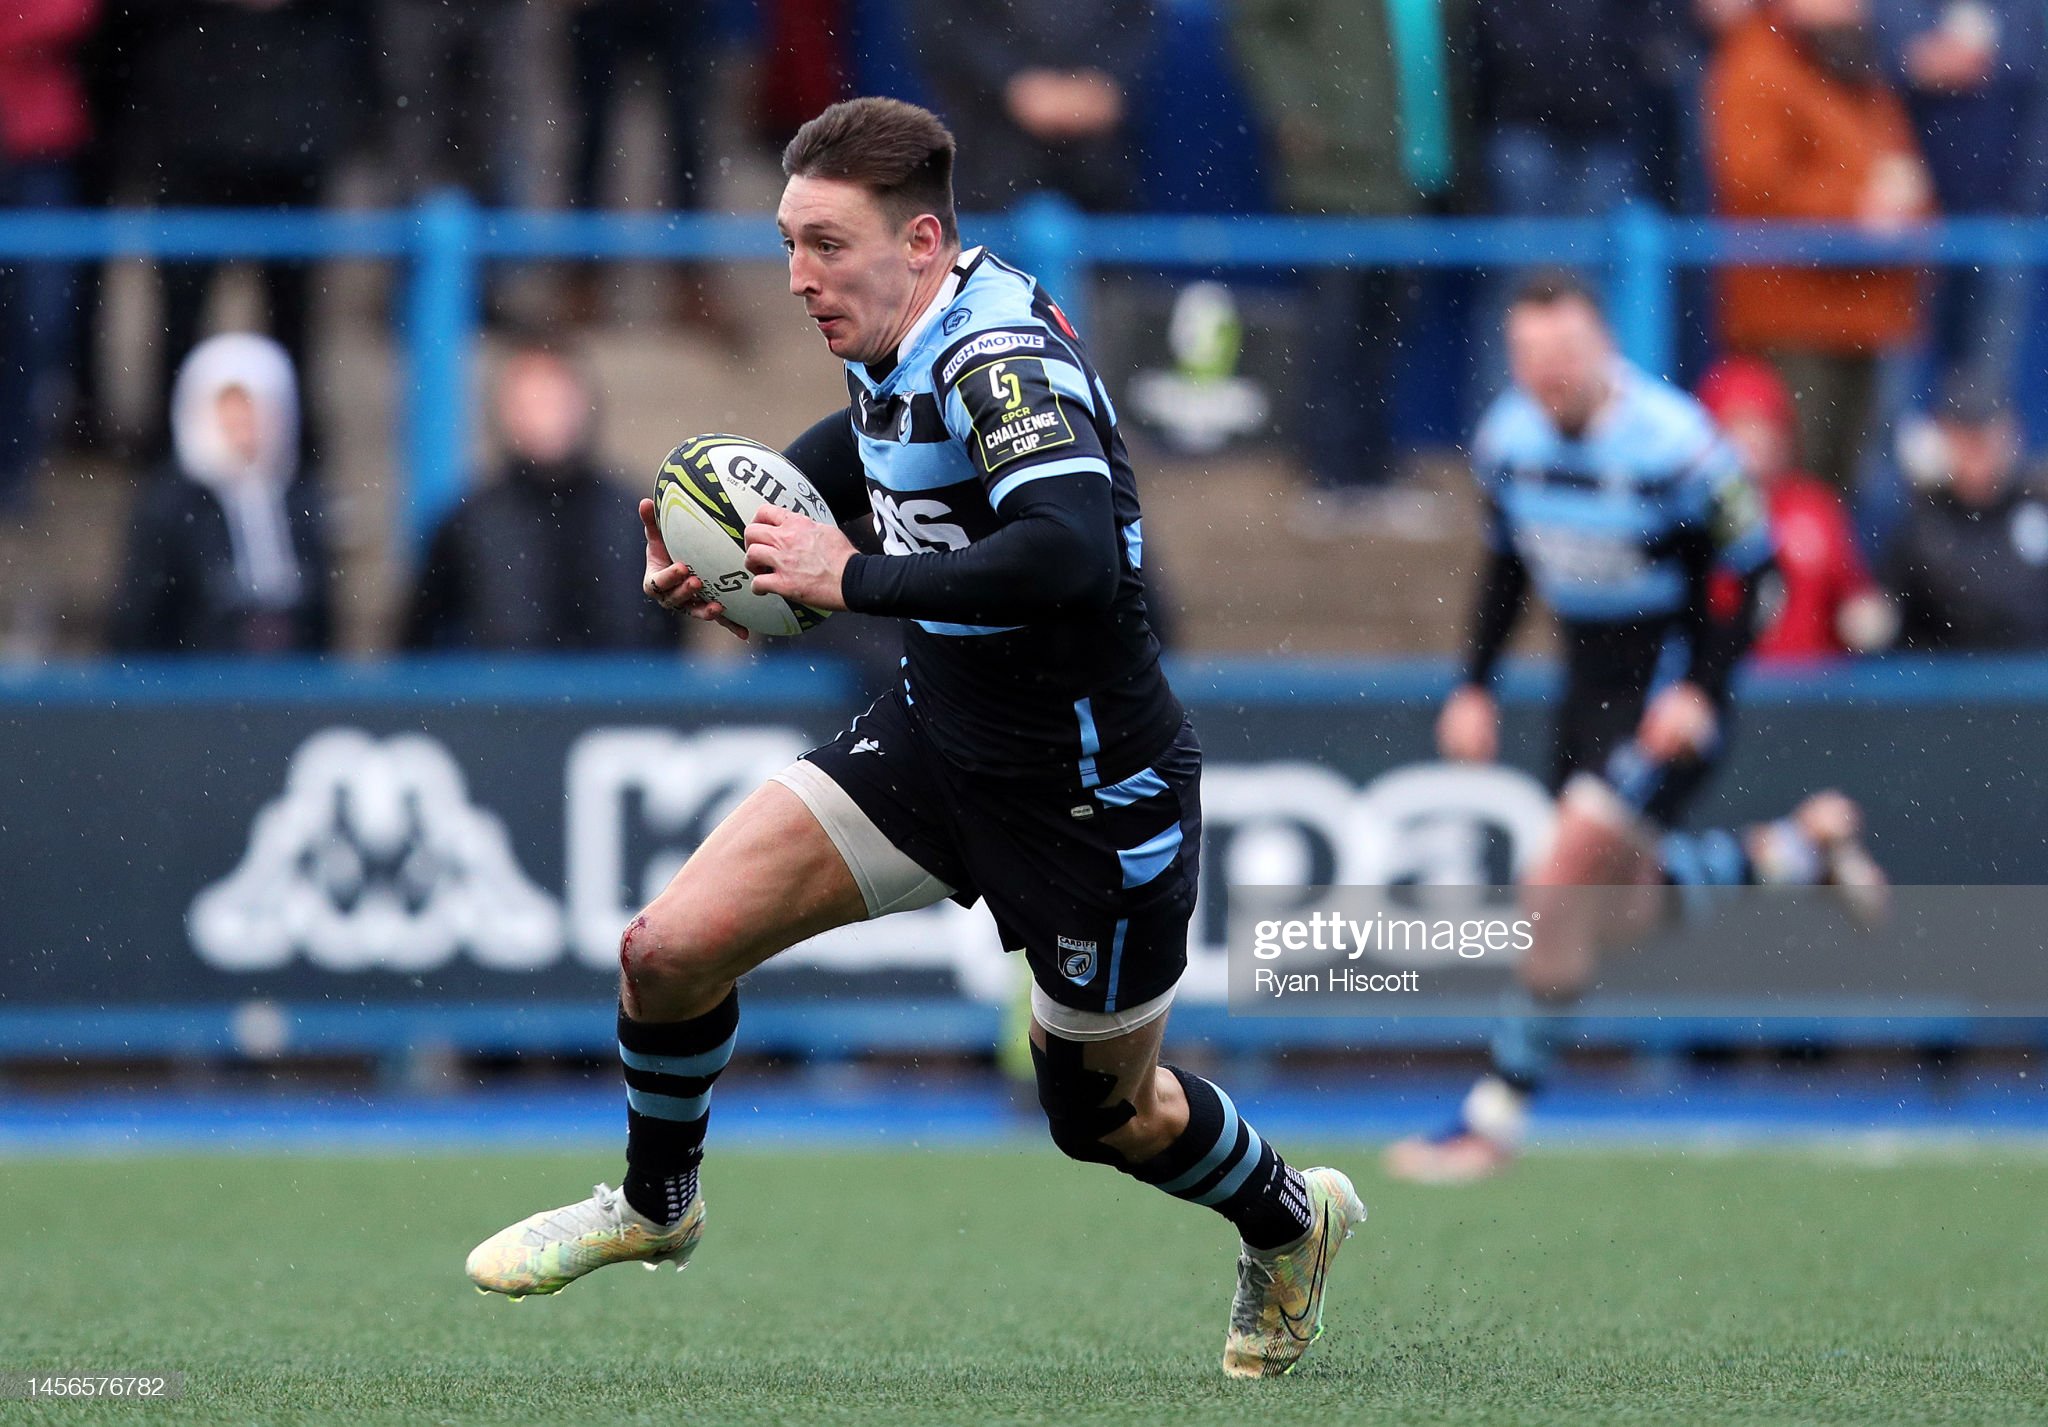 Josh Adams of Cardiff Rugby